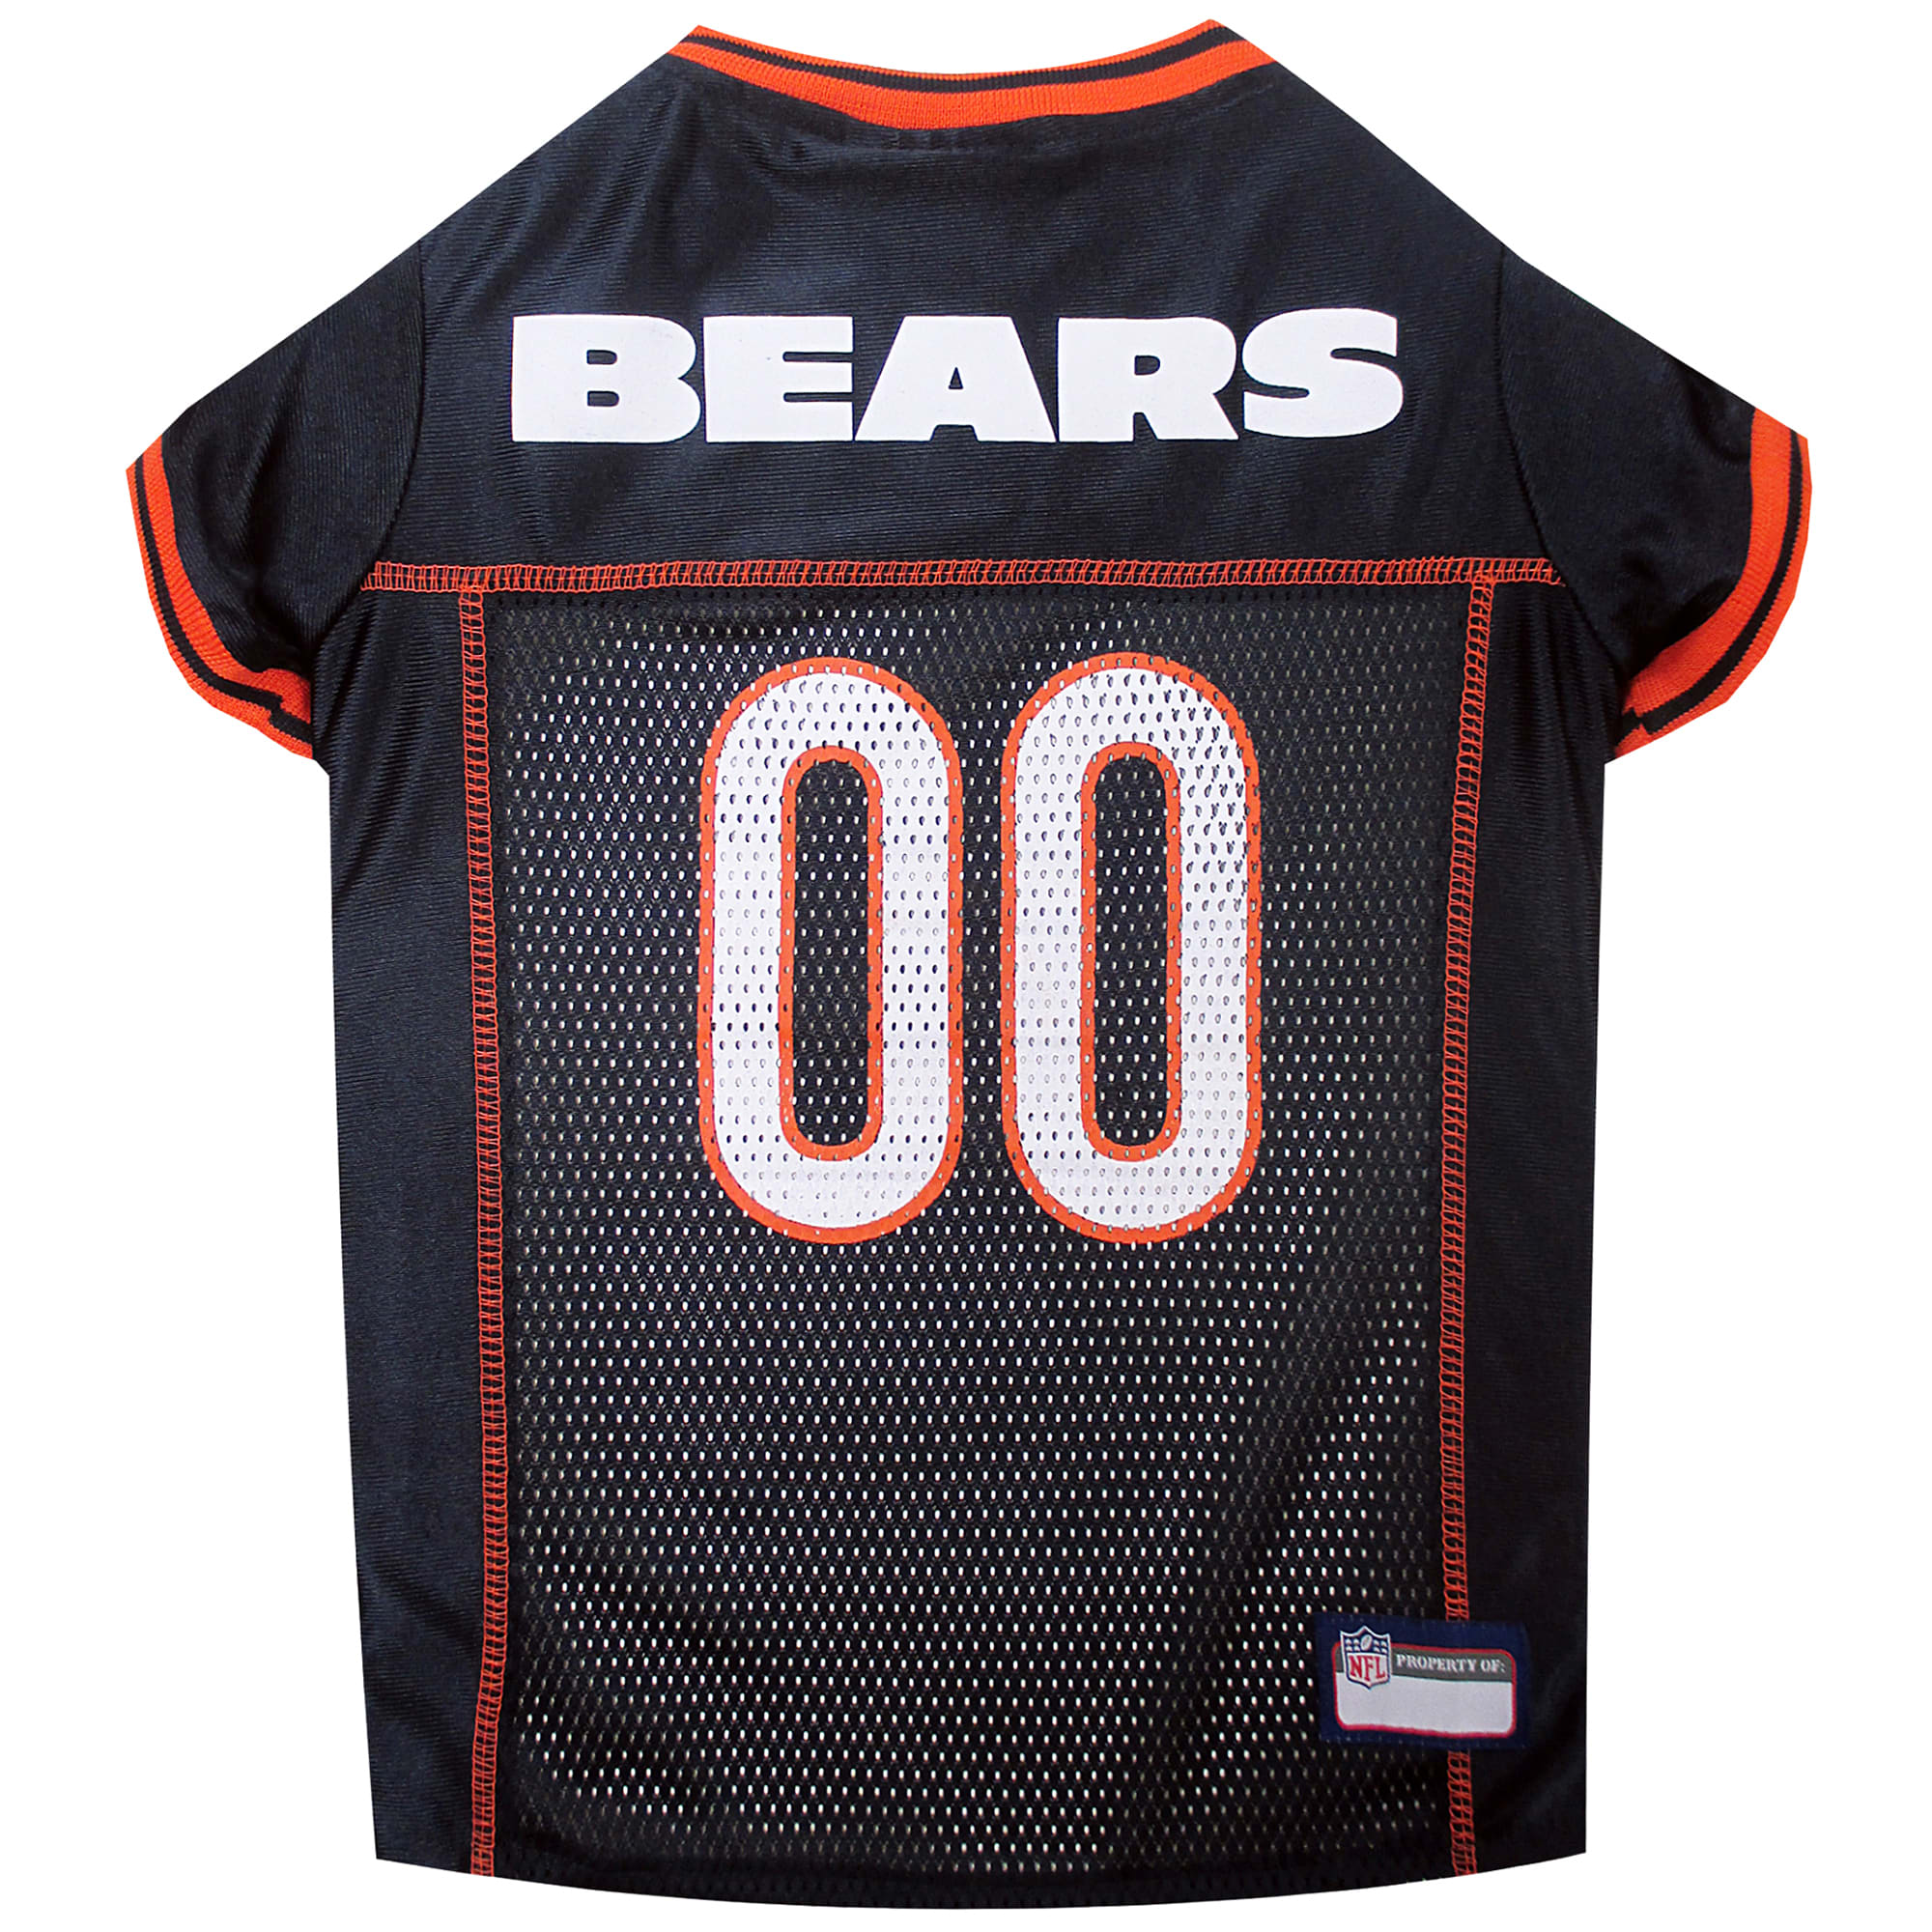 official bears jersey